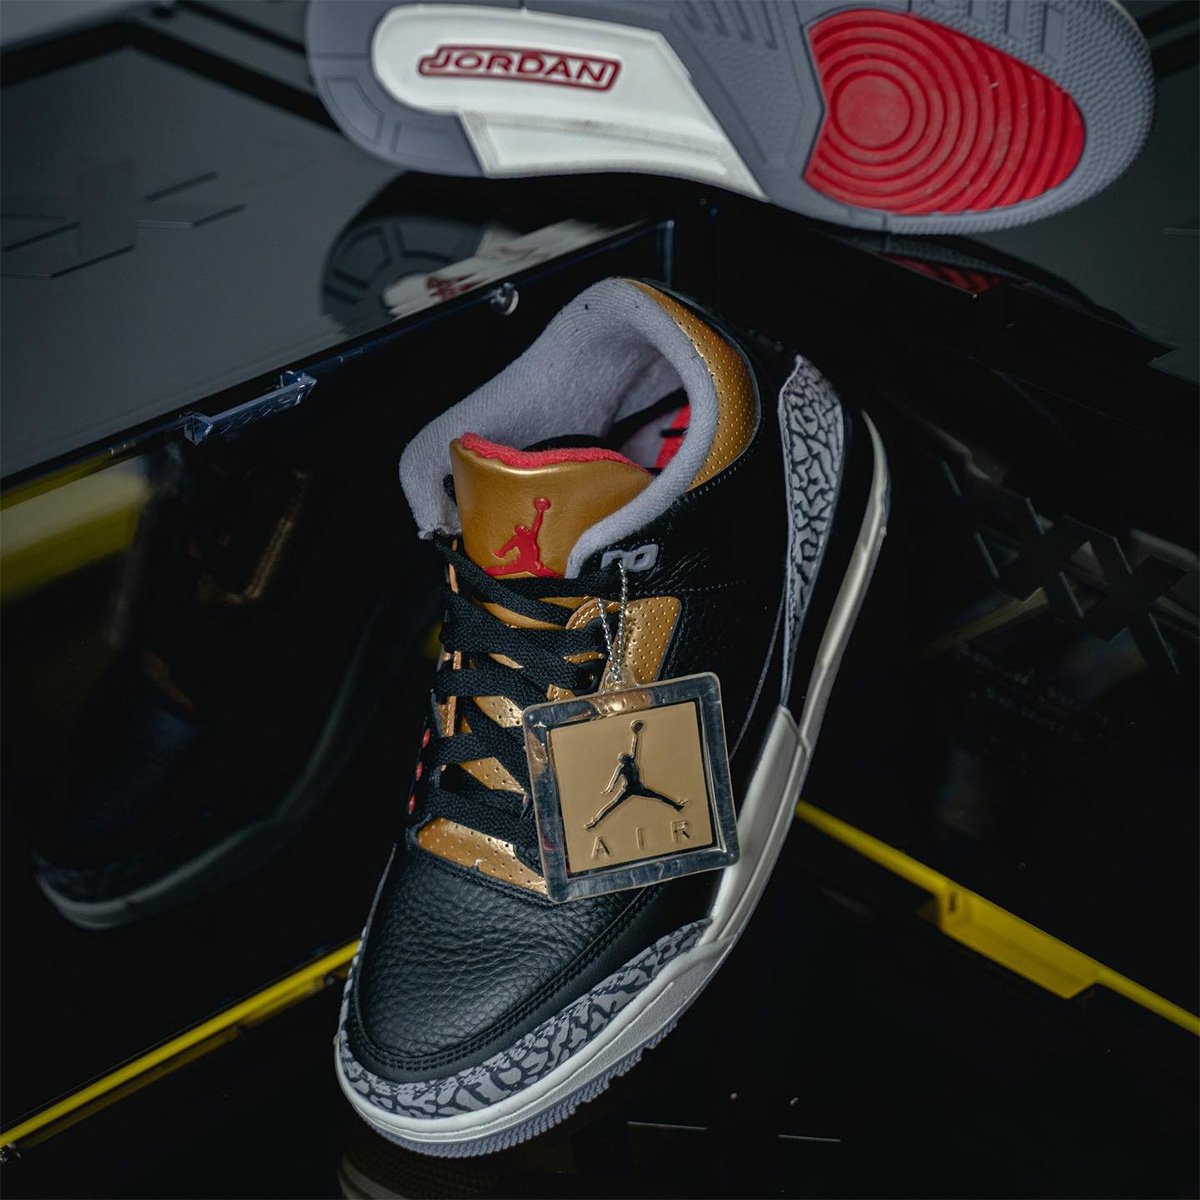 Air Jordan 3 Black Metallic Gold Cement Grey CK9246-067 Release Details